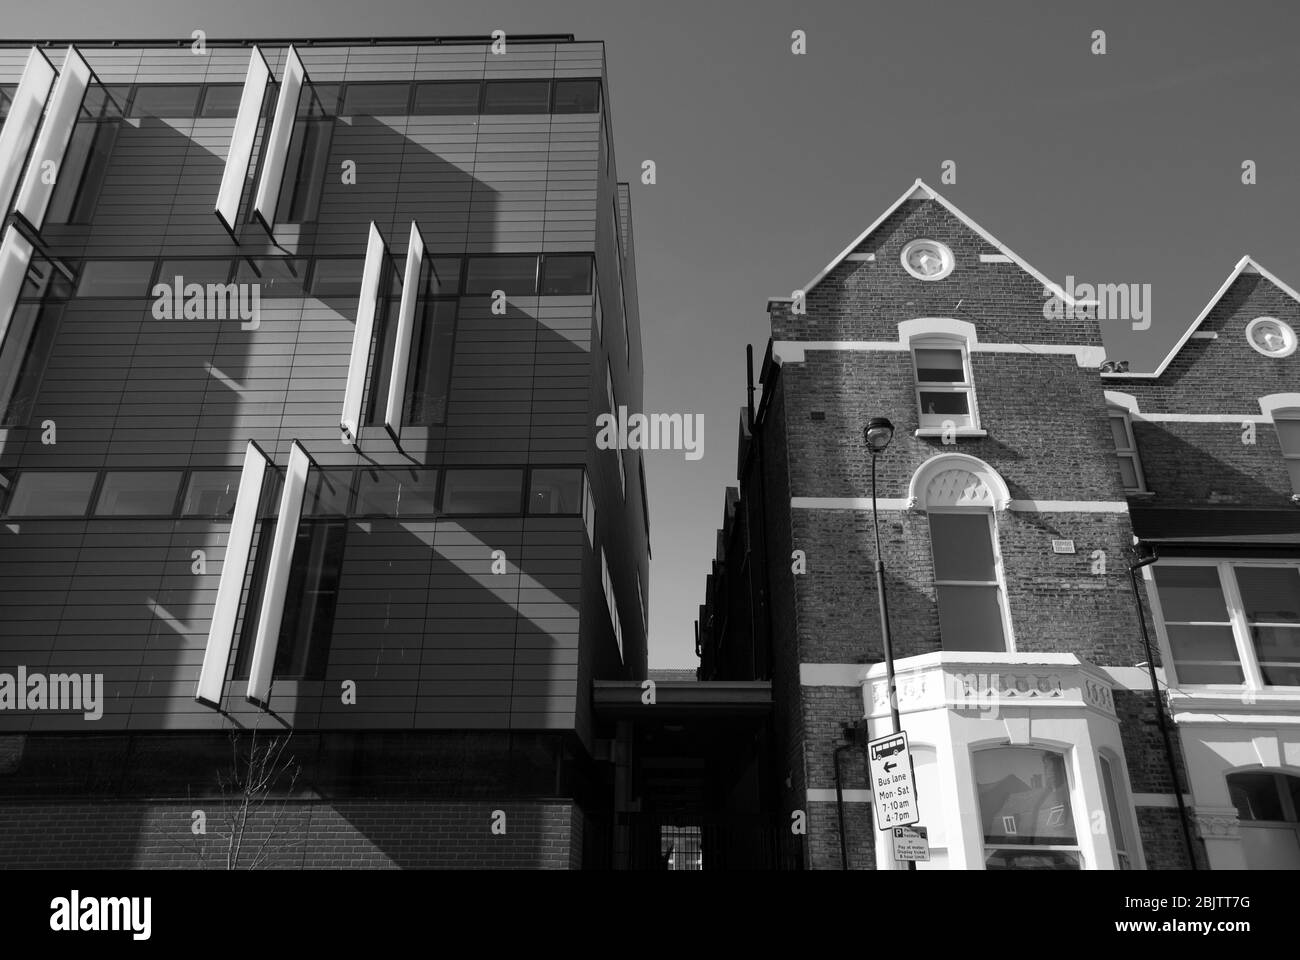 Pannelli in terracotta Solar Shades Windows Fins Latymer Upper School, King Street, Hammersmith, London W6 Van Heyningen & Haward Architects Foto Stock